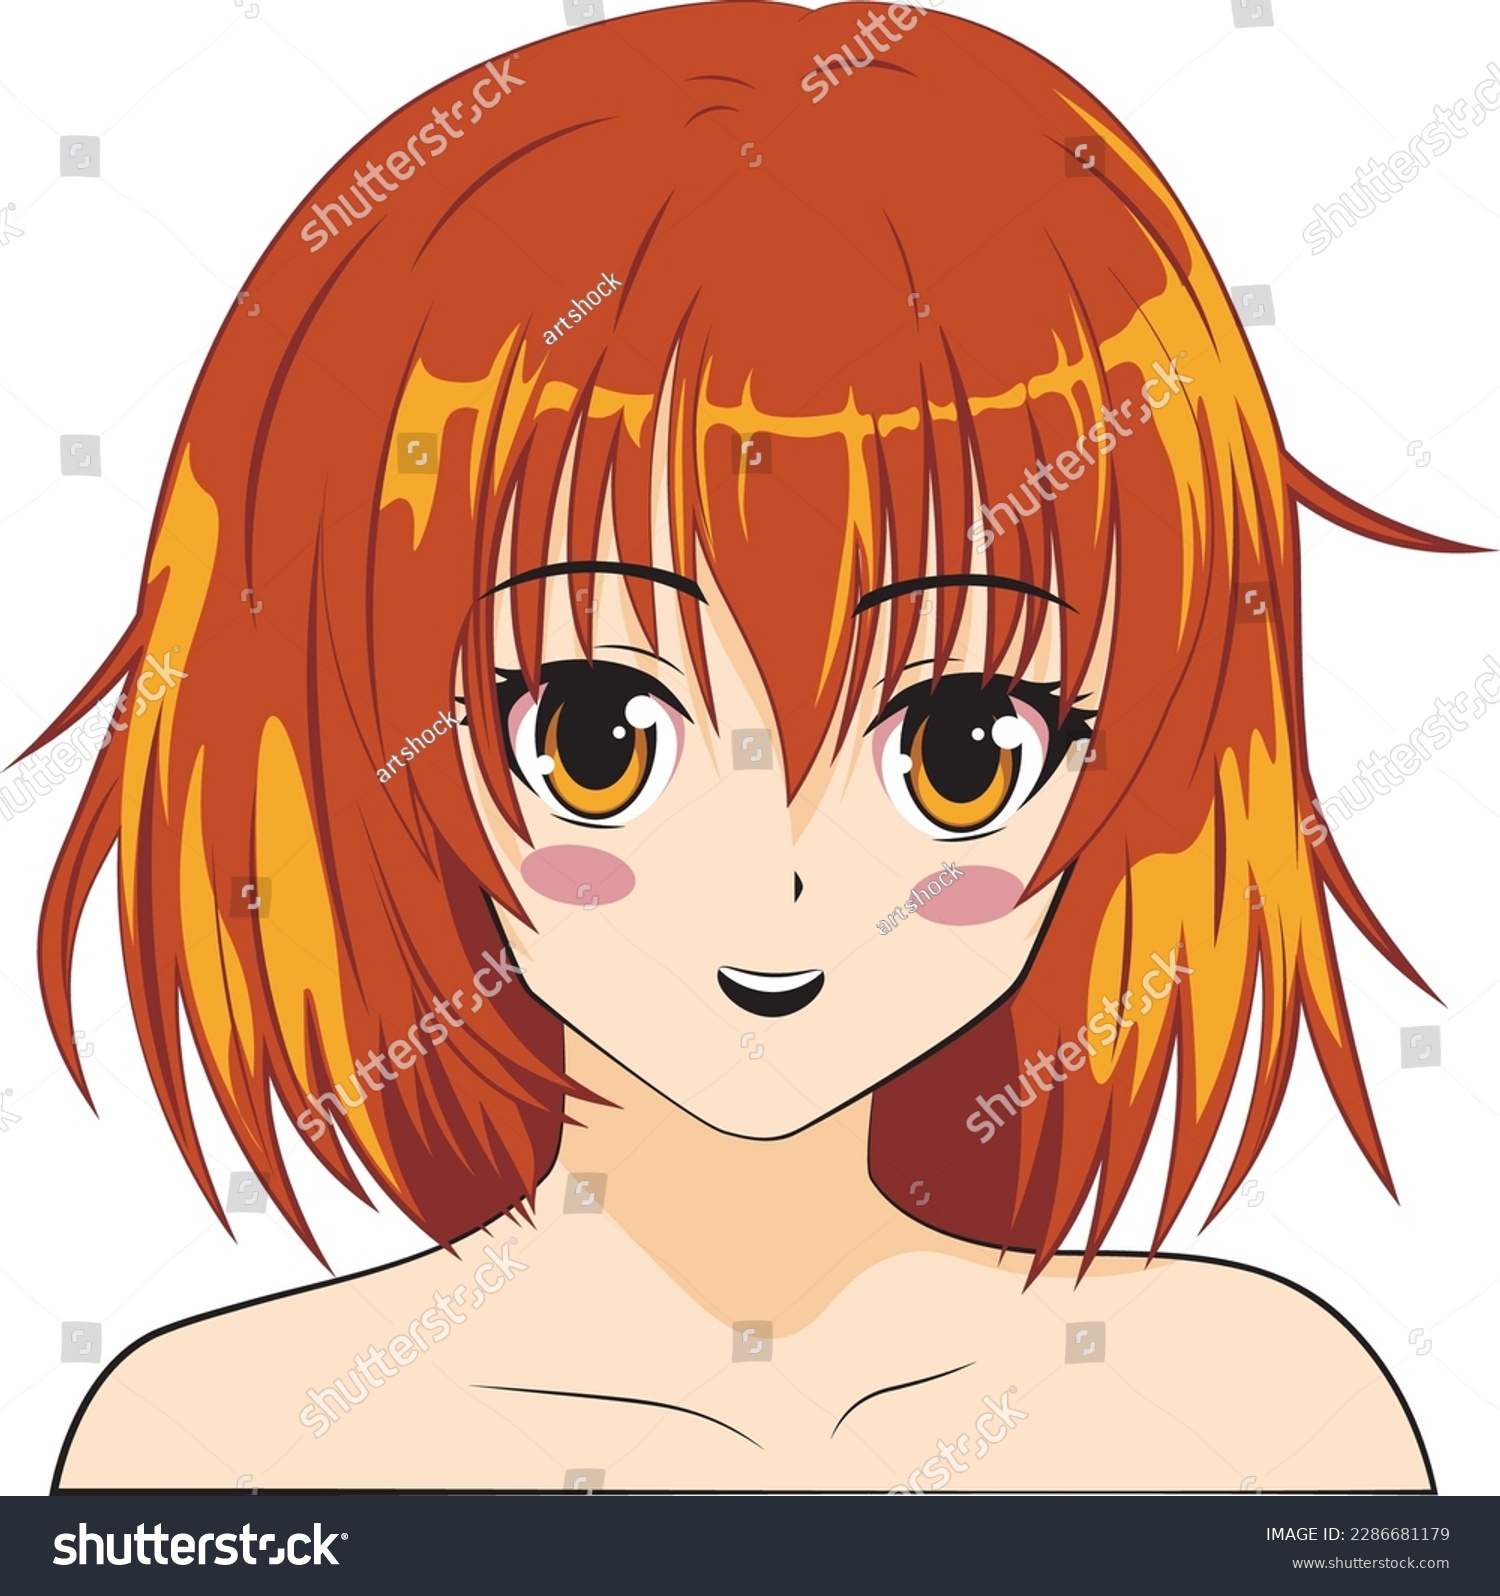 Best of Anime girl with long orange hair